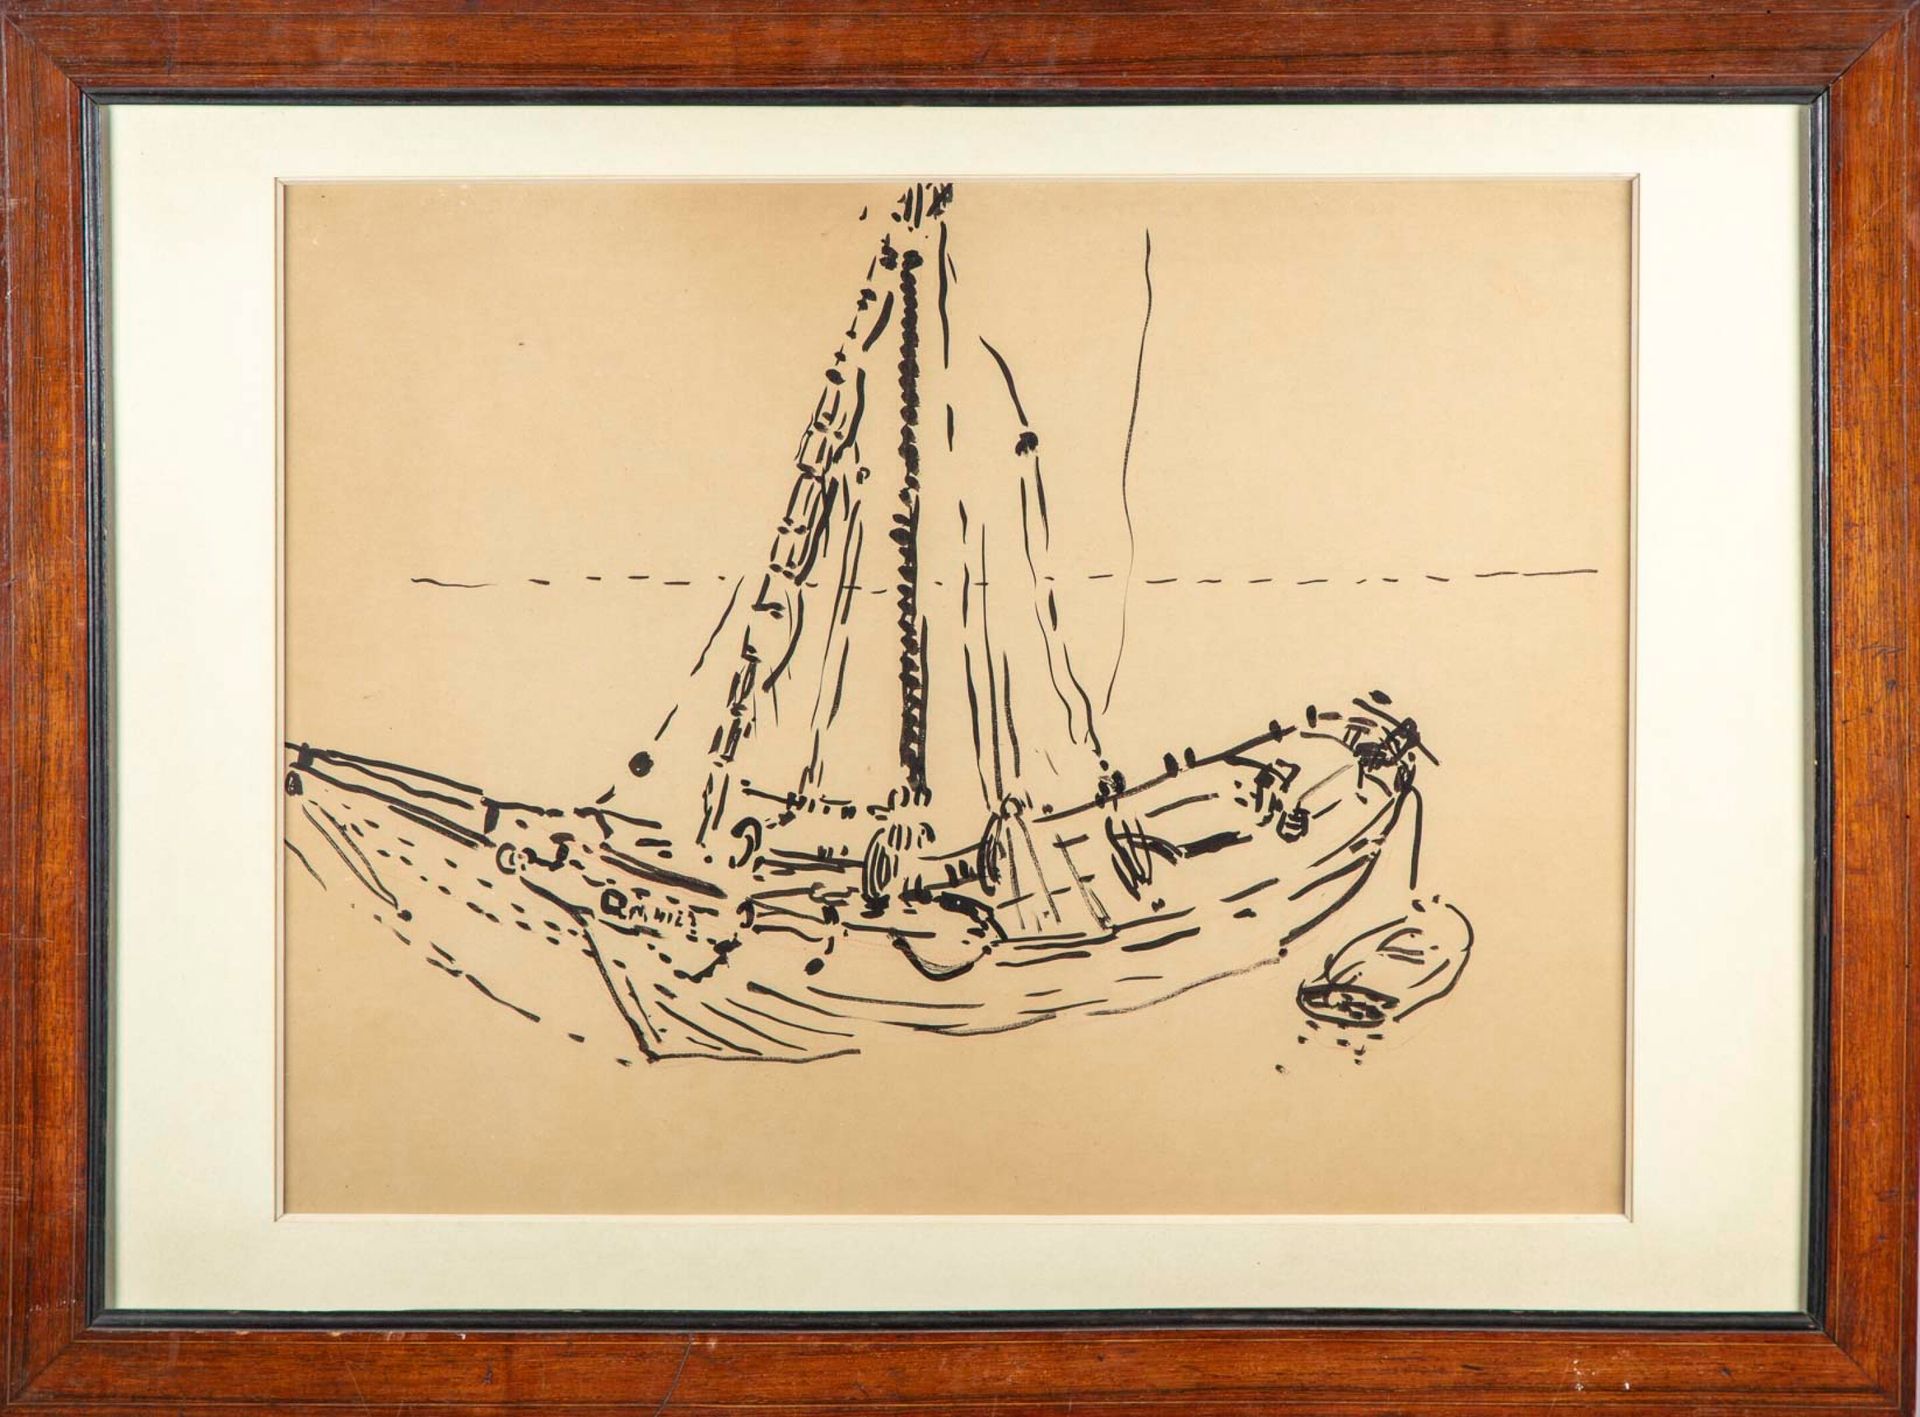 DERAIN 安德烈-德兰 (1880 - 1964)

海军，伦敦1906年

纸上印度墨水和粉笔画

49.2 x 62.8厘米

出处：André Lev&hellip;